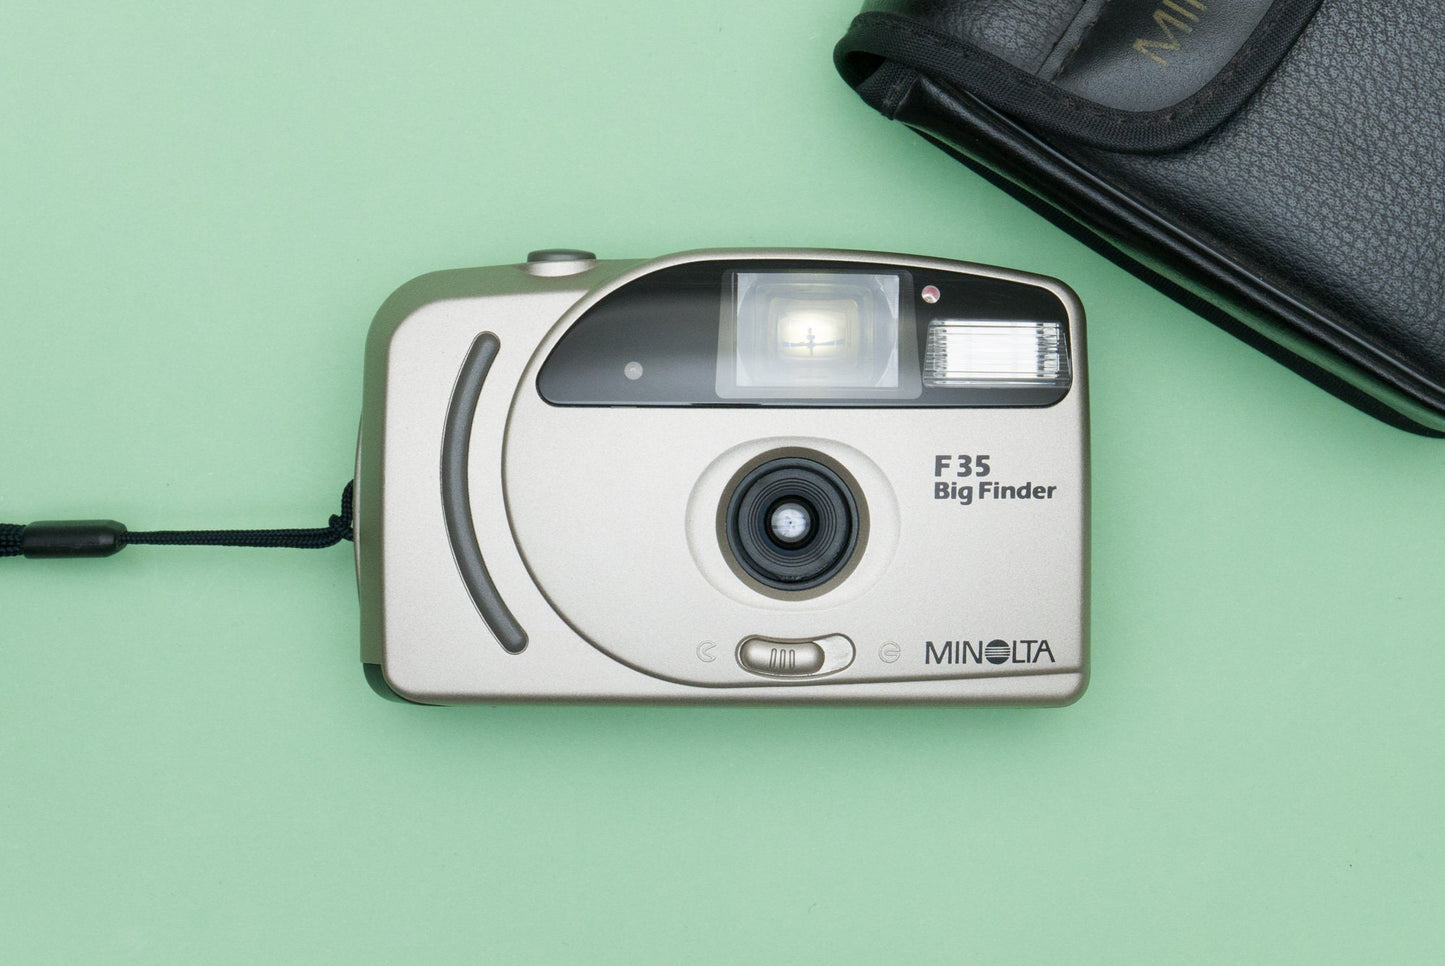 Minolta F35 Big Finder Compact 35mm Point and Shoot Film Camera